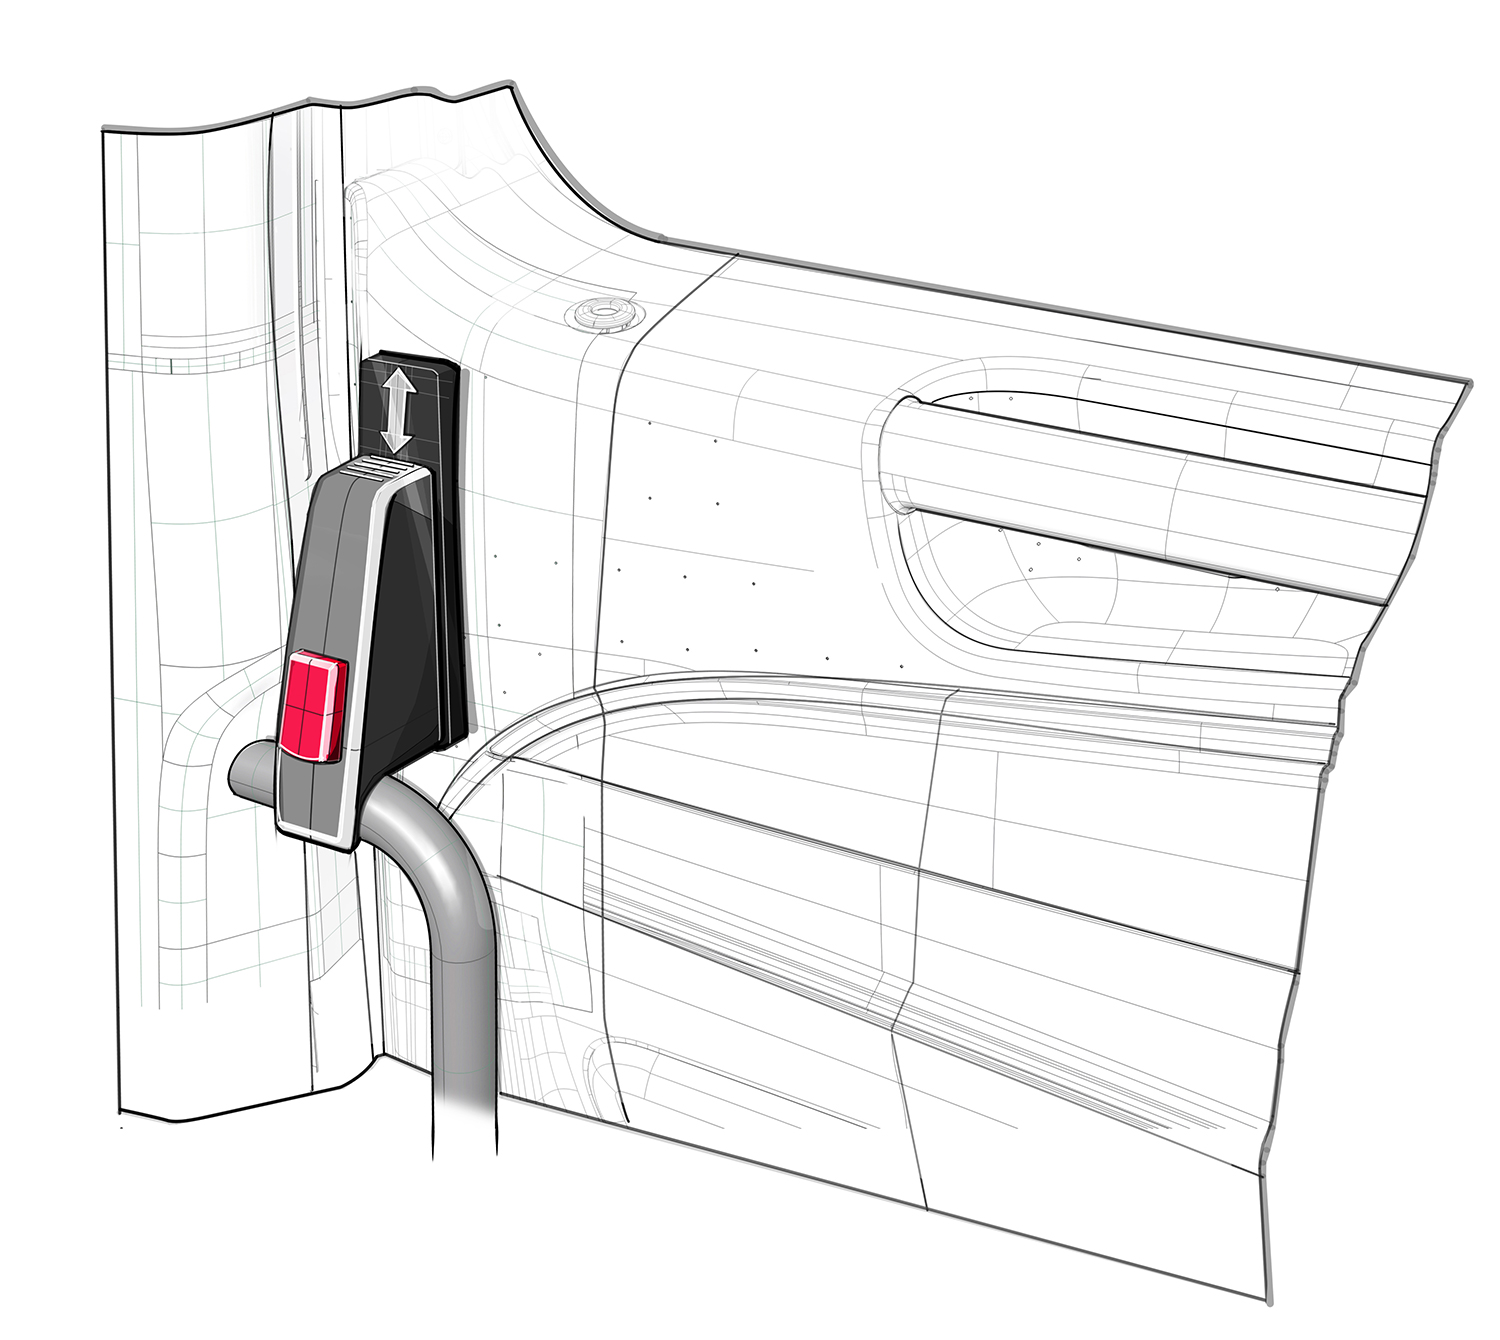 Berco - Nightlock Product Development Concept ID Industrial Design Sketch